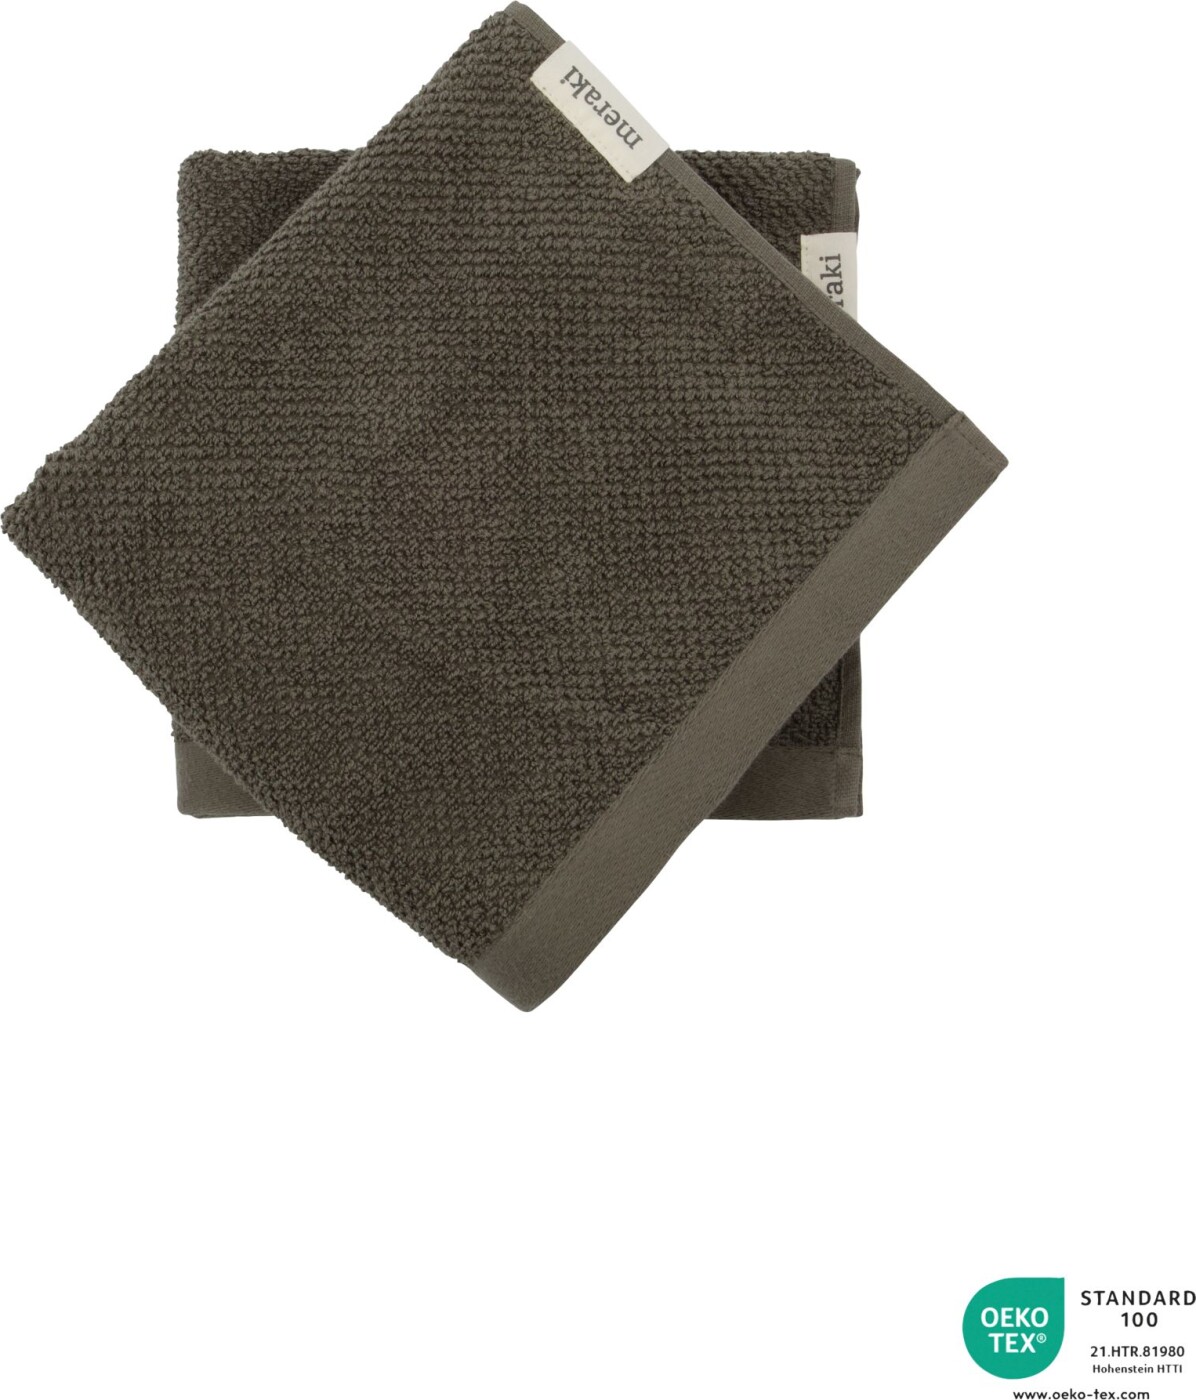 Meraki - Håndklæde - Solid - Army - 50x100 Cm